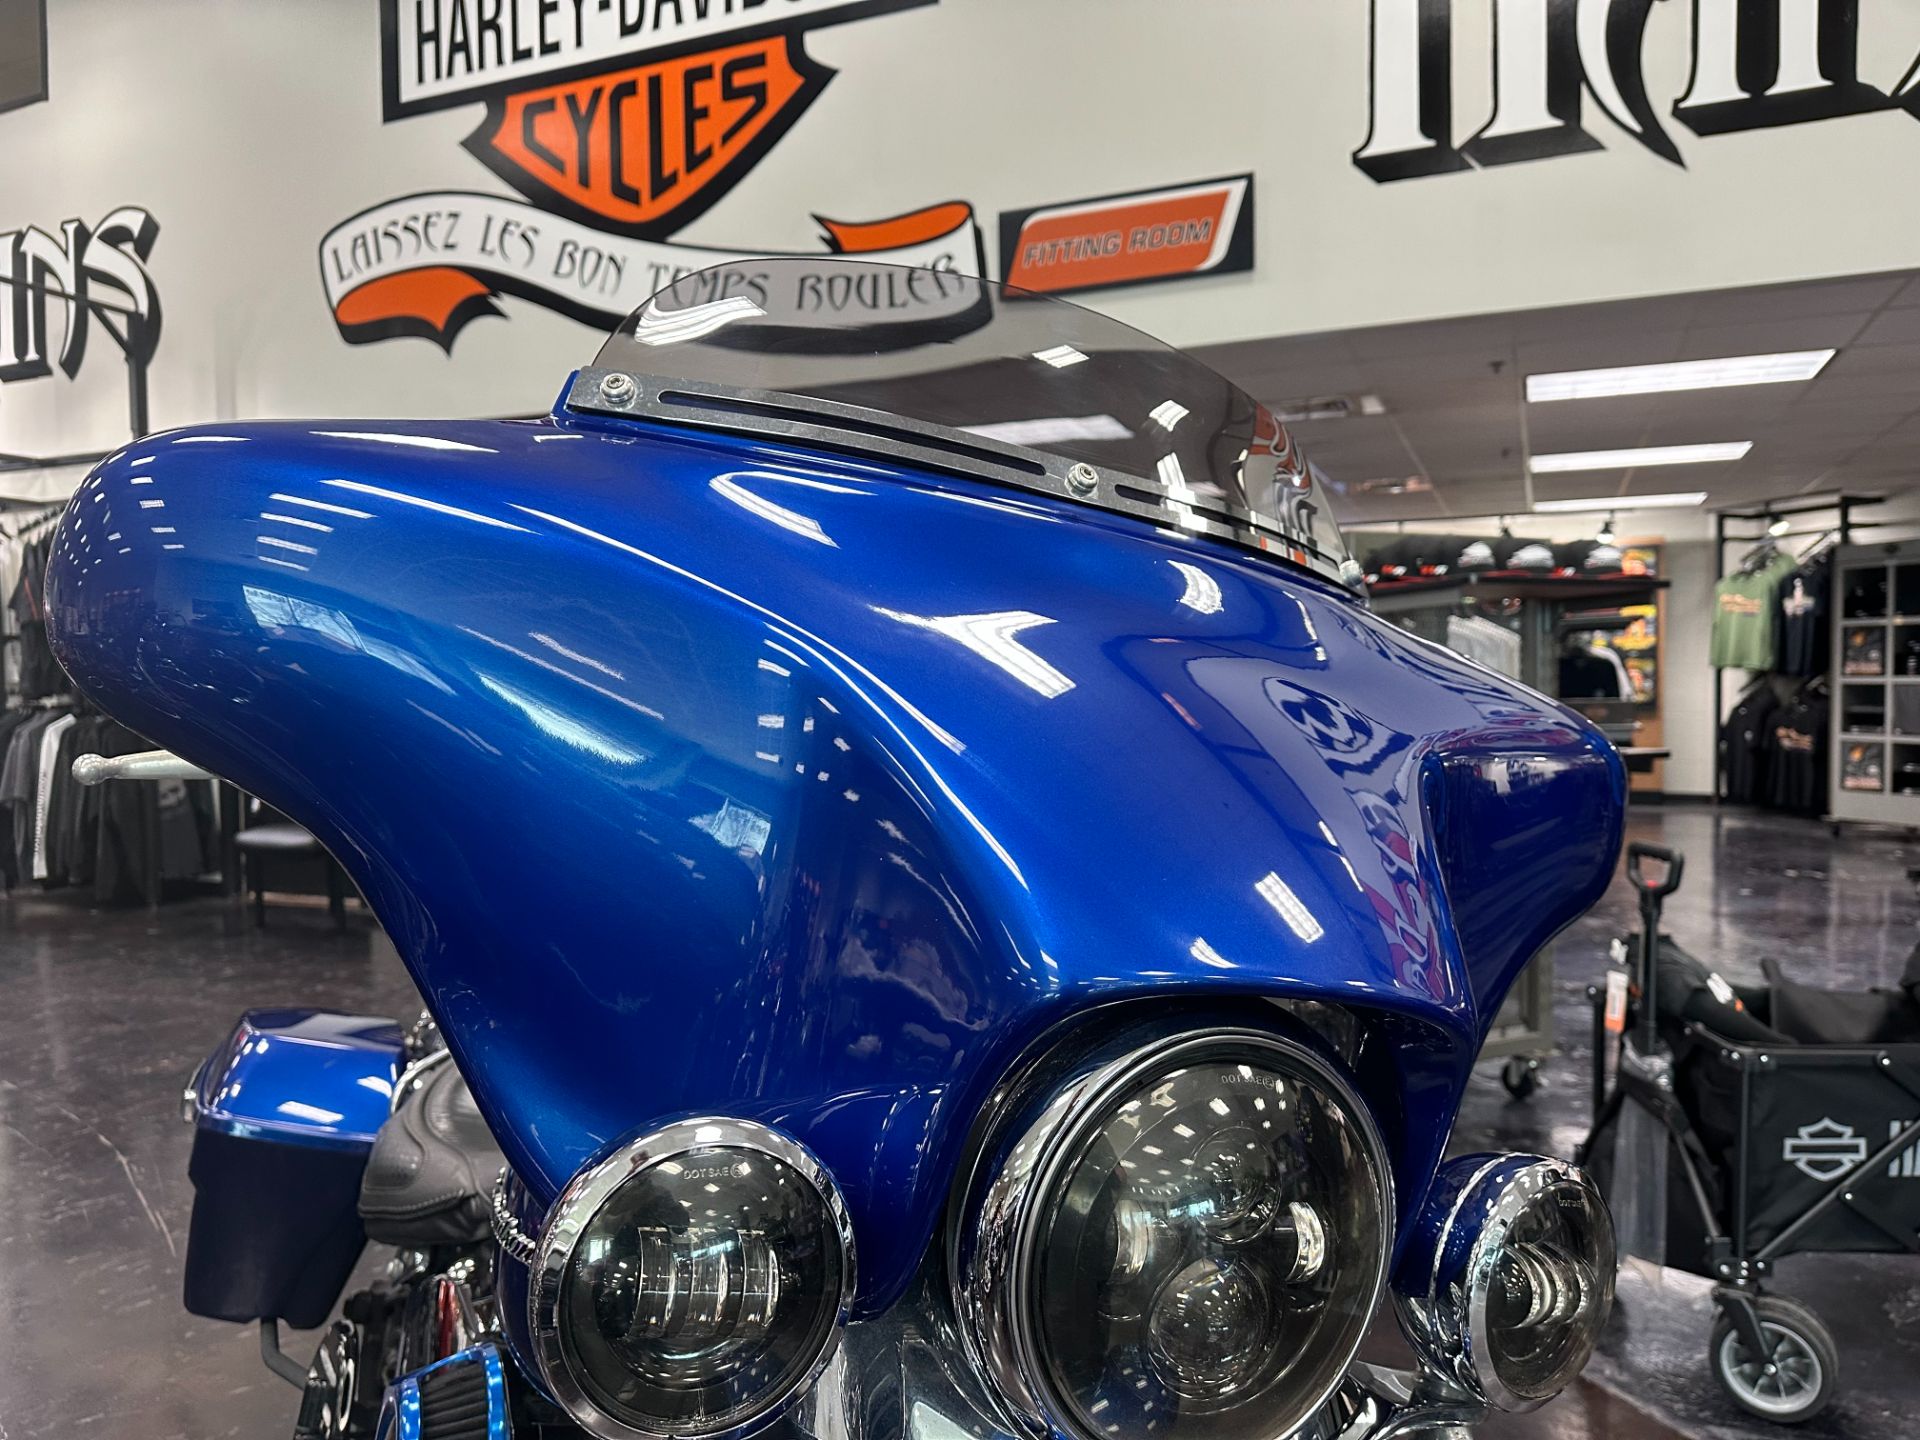 2016 Harley-Davidson Softail® Deluxe in Metairie, Louisiana - Photo 2